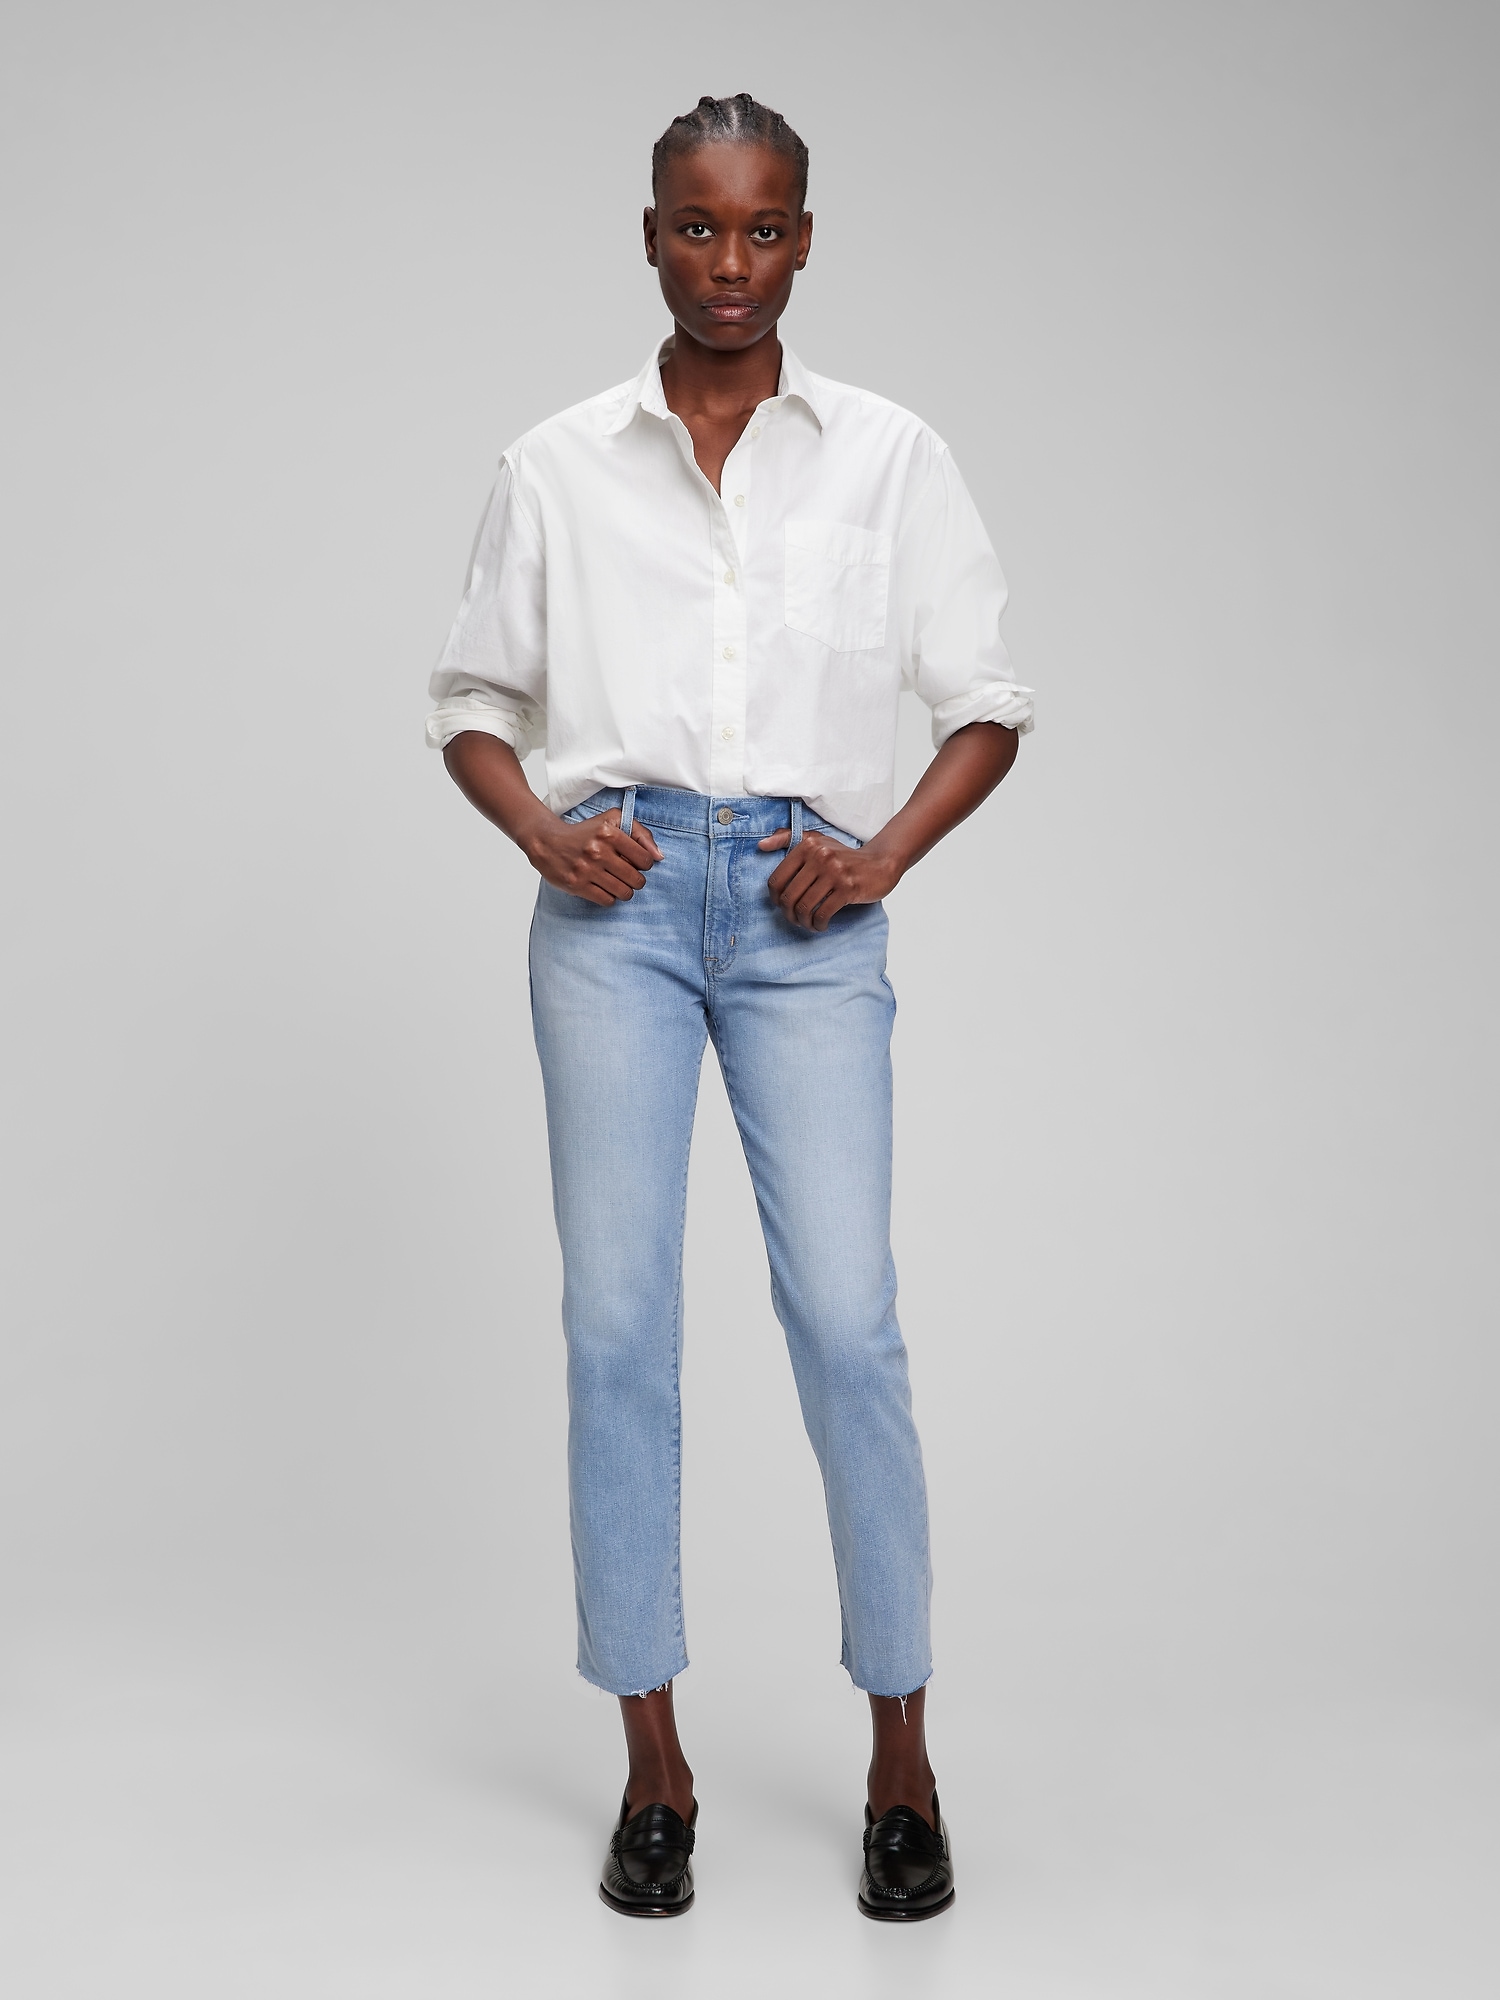 Mid Rise Girlfriend Jeans | Gap